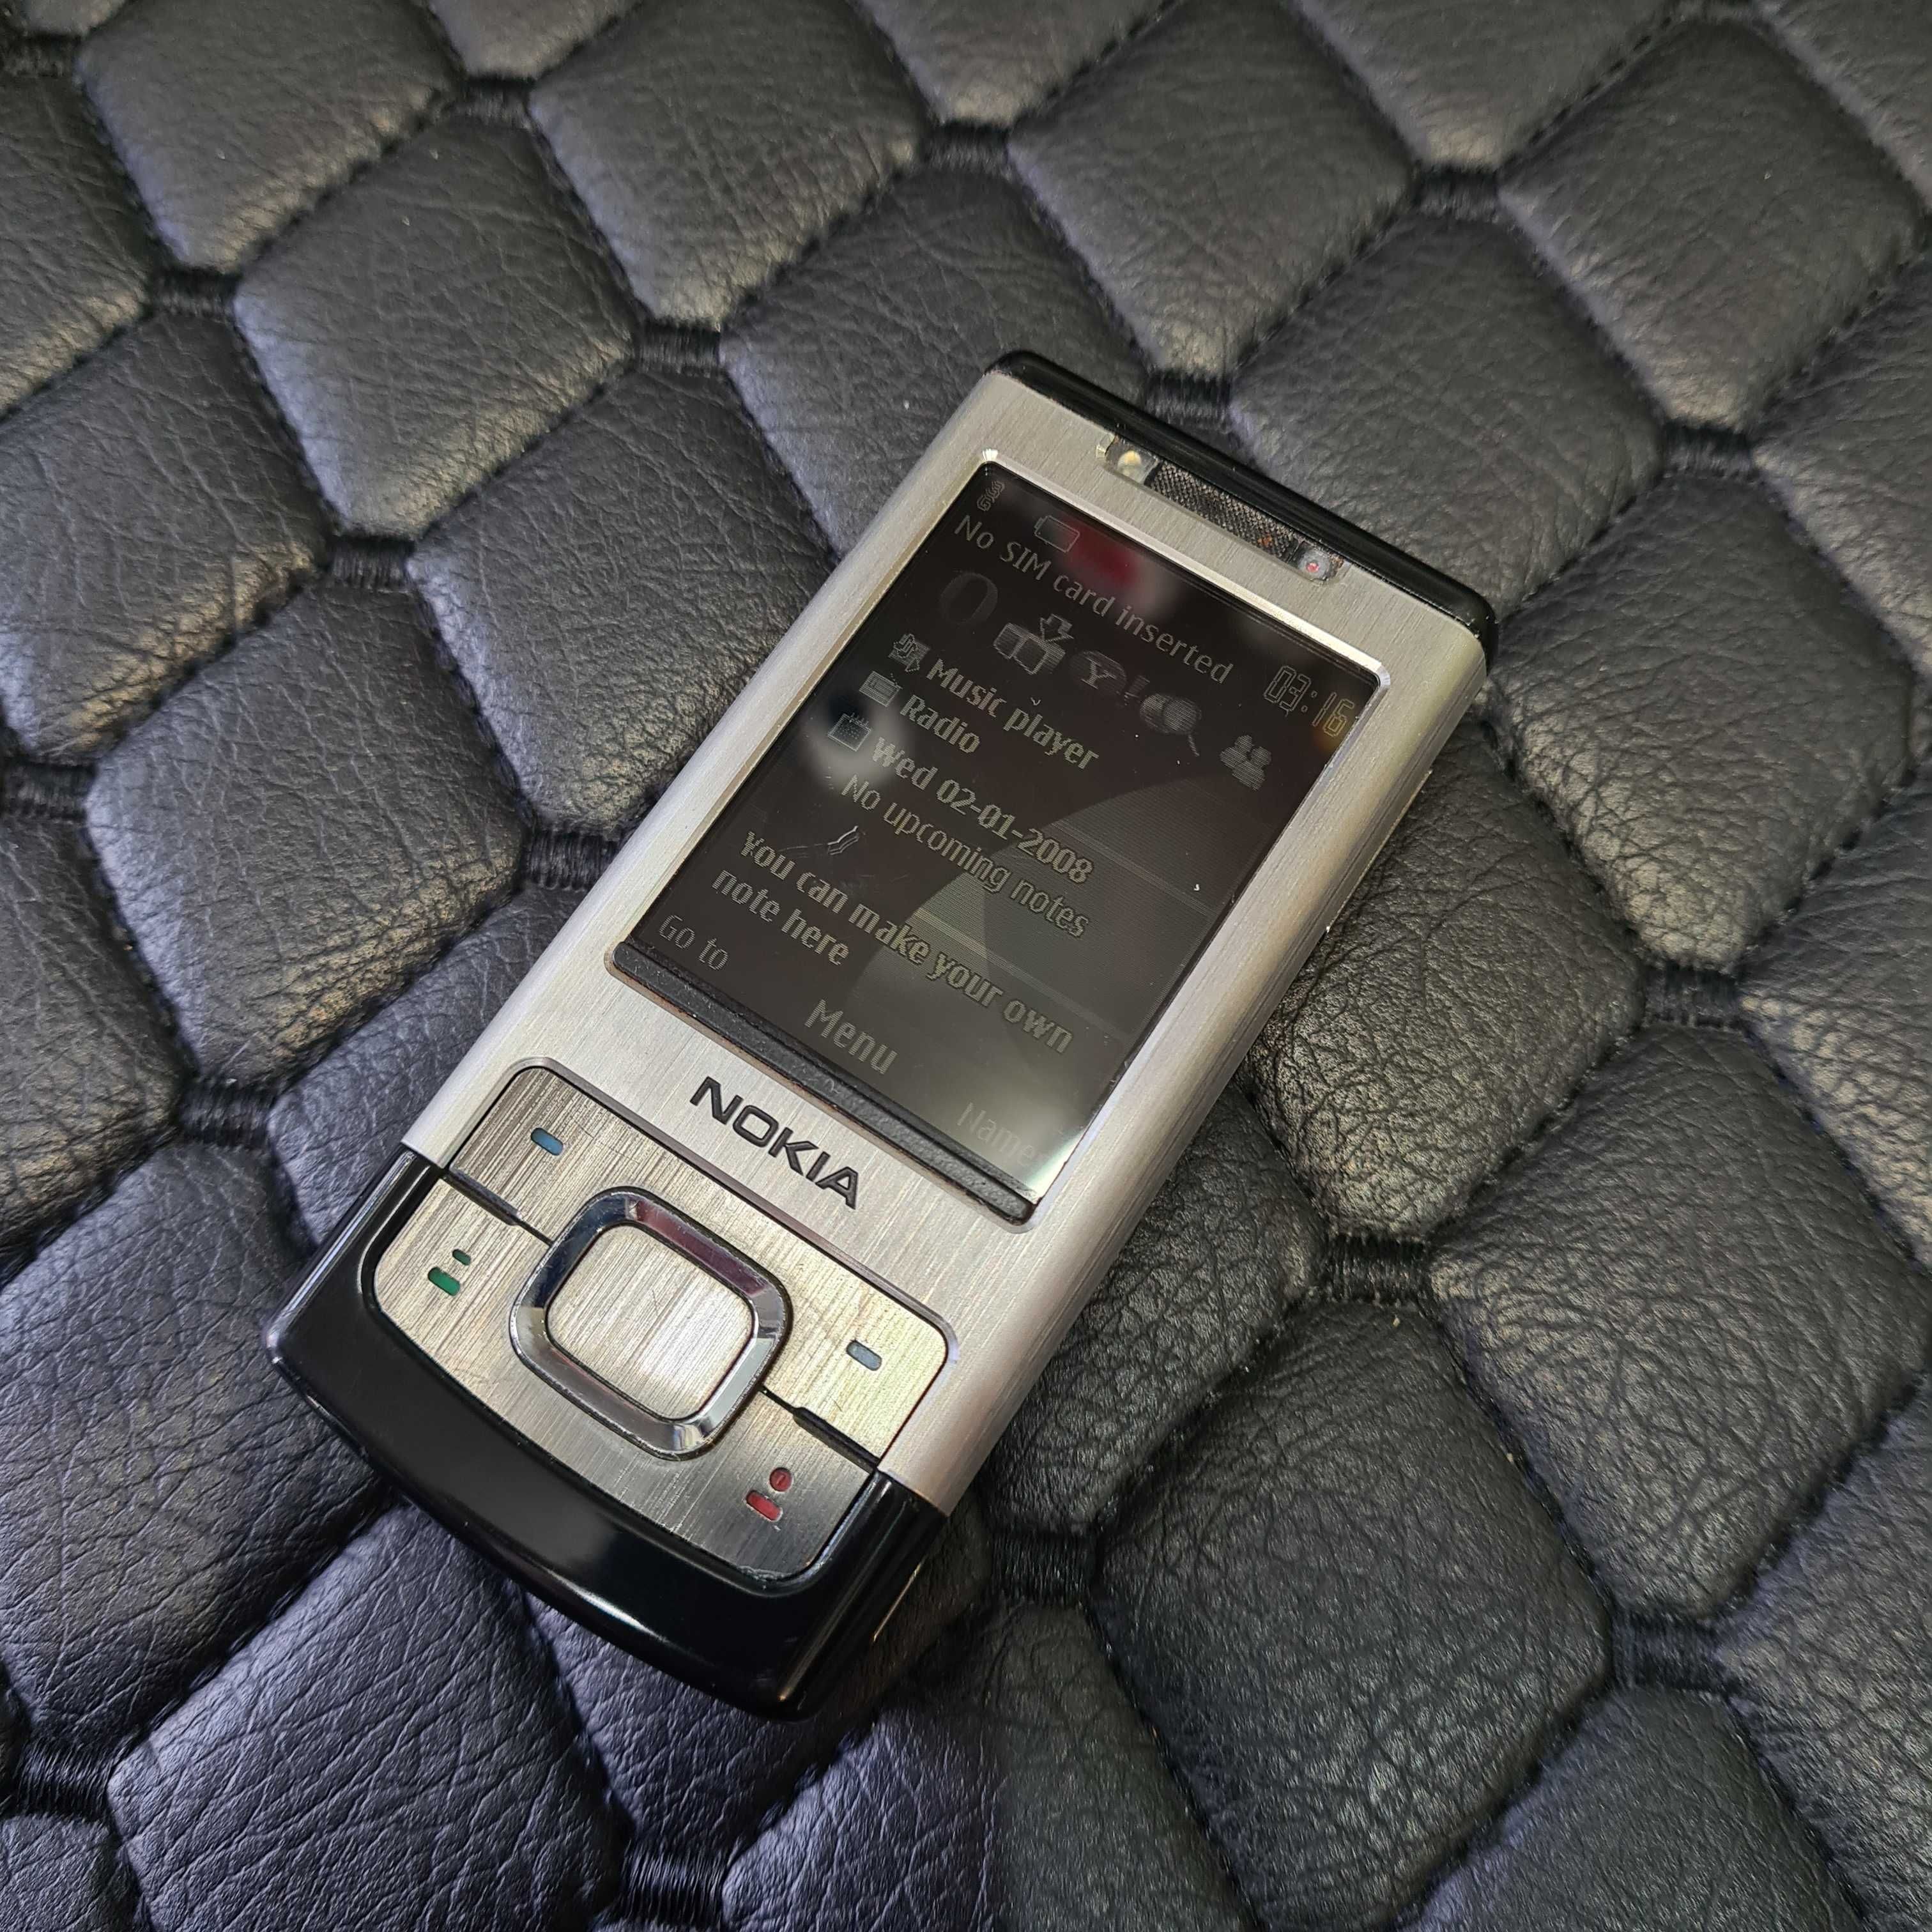 Nokia 6500 slide